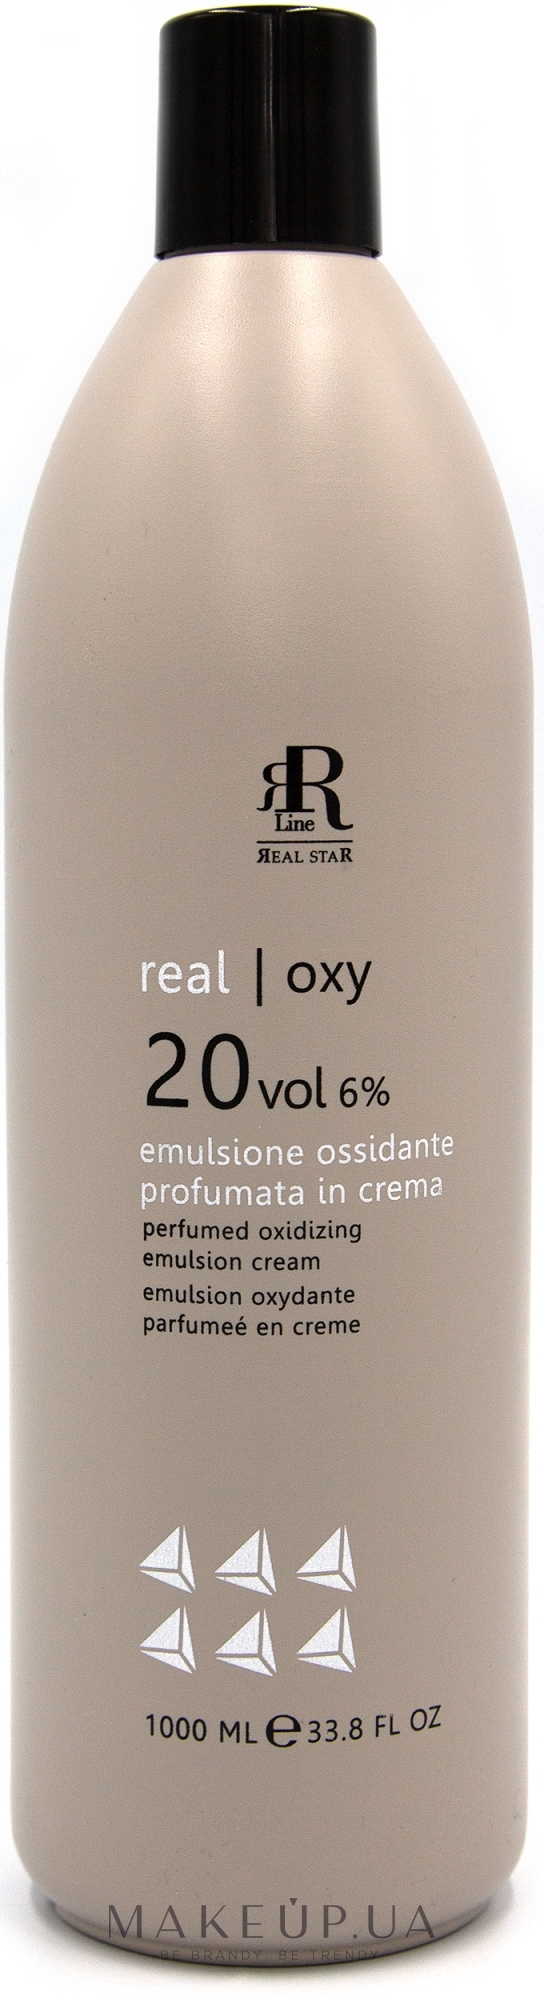 Парфумована окислювальна емульсія 6% - RRLine Parfymed Ossidante Emulsione Cream 6% 20 Vol — фото 1000ml